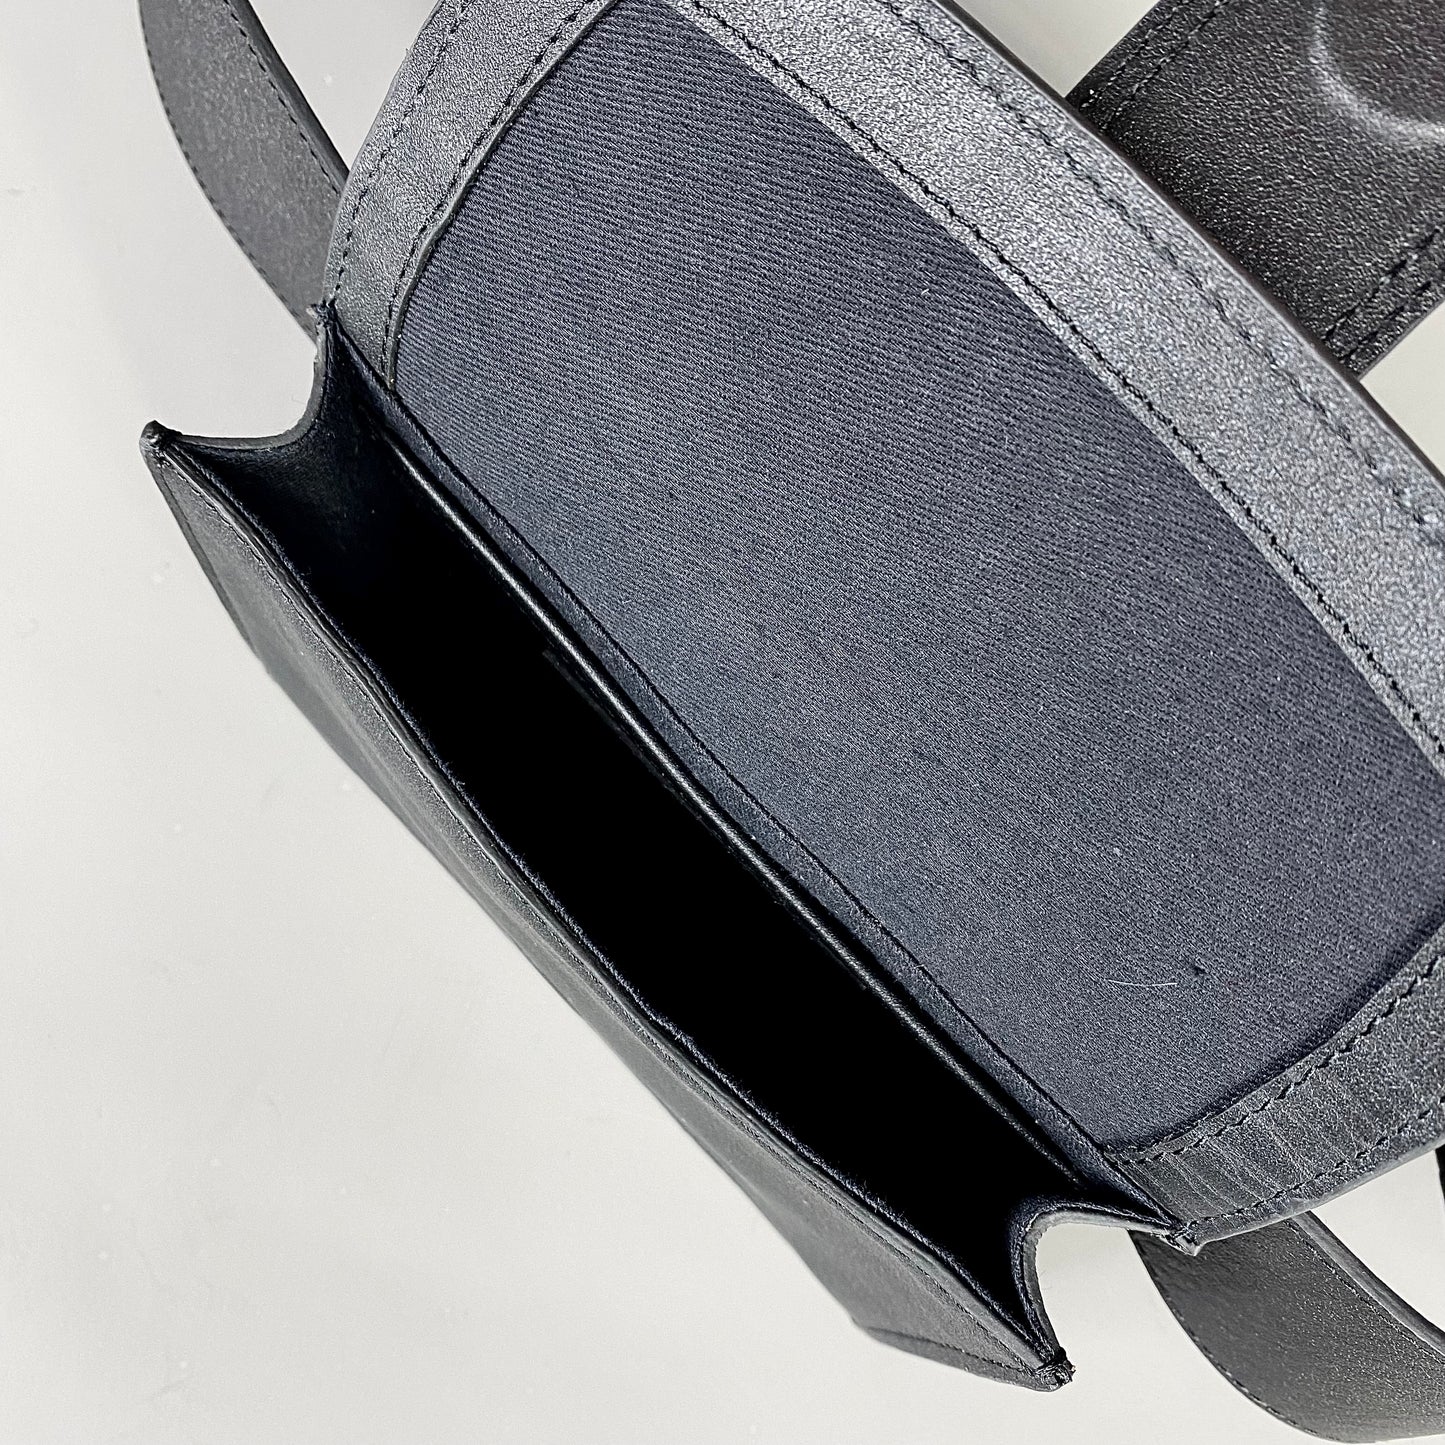 Black Leather Mini Belt Bag